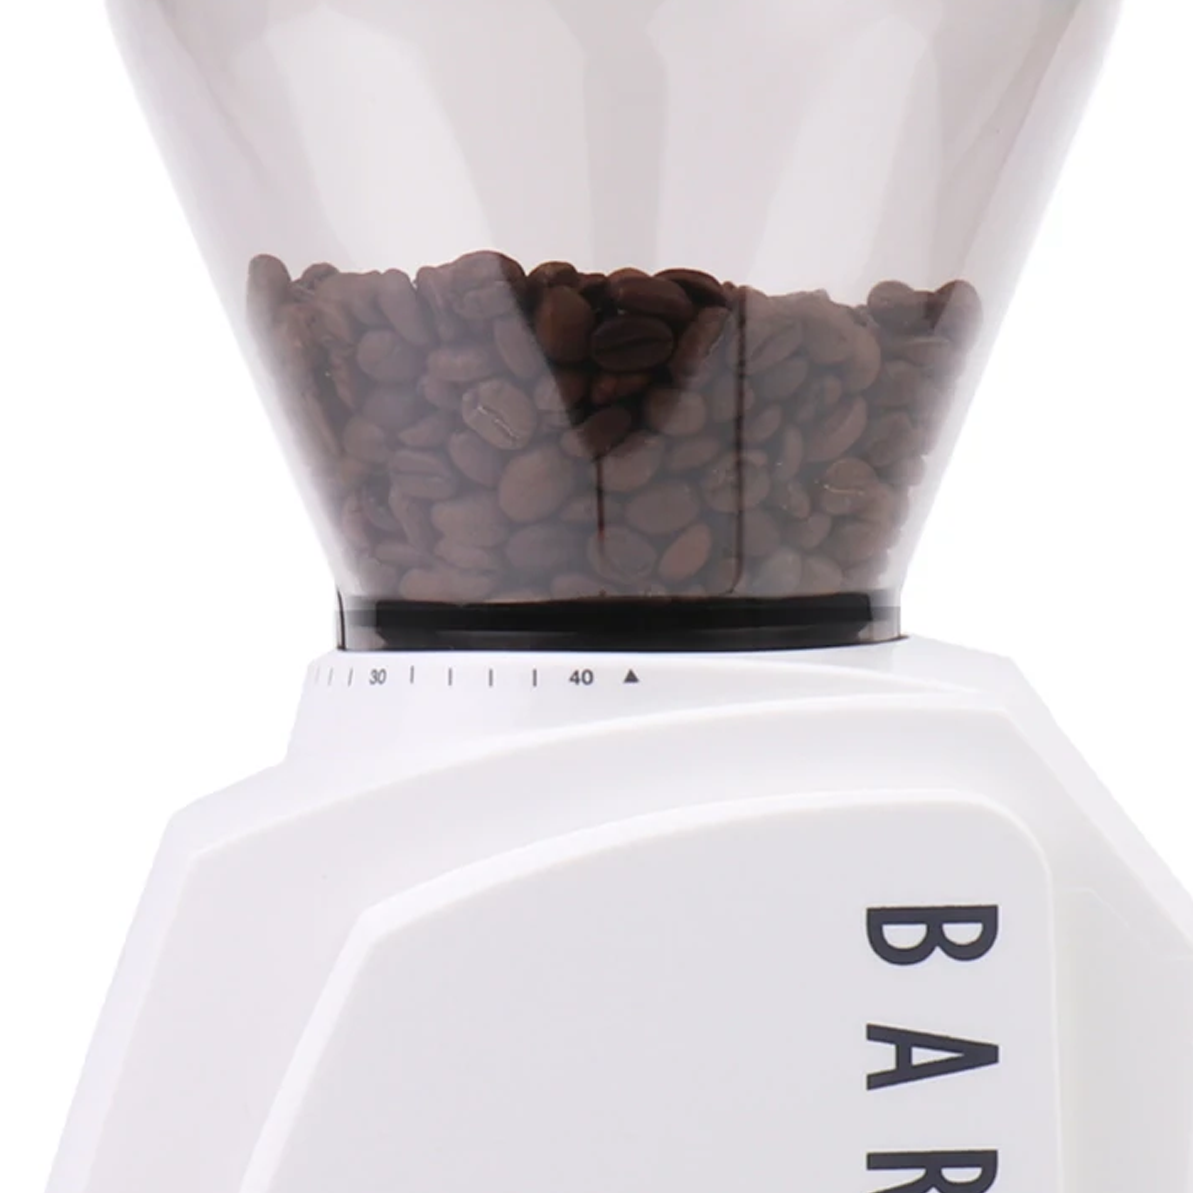 Baratza Virtuoso+ Electric Burr Grinder – Bones Coffee Company